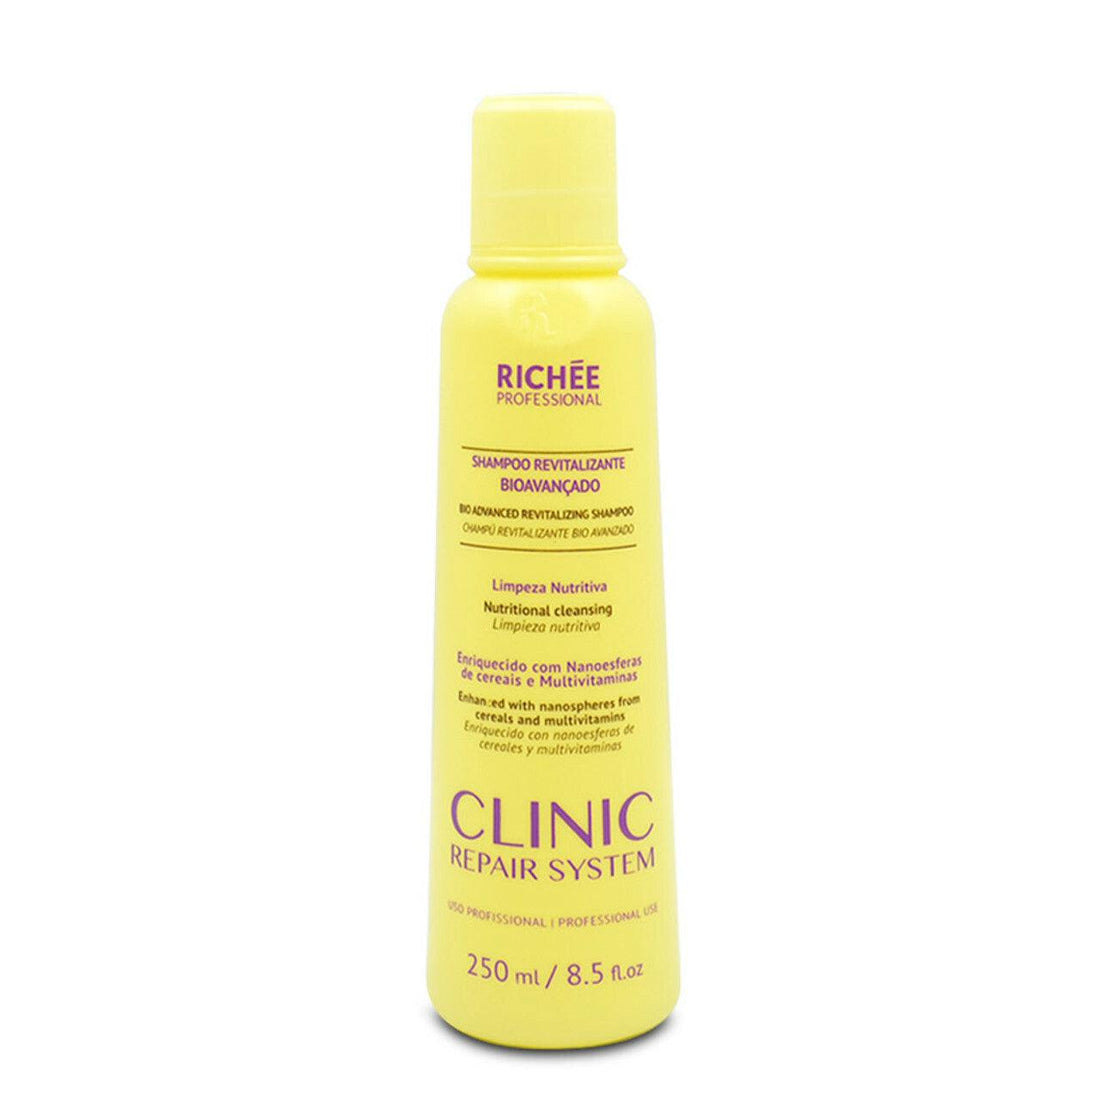 Richee, Clinic Repair System Revitalizante Bioavançado, Deep Cleansing Shampoo For Hair 250ml - BUY BRAZIL STORE